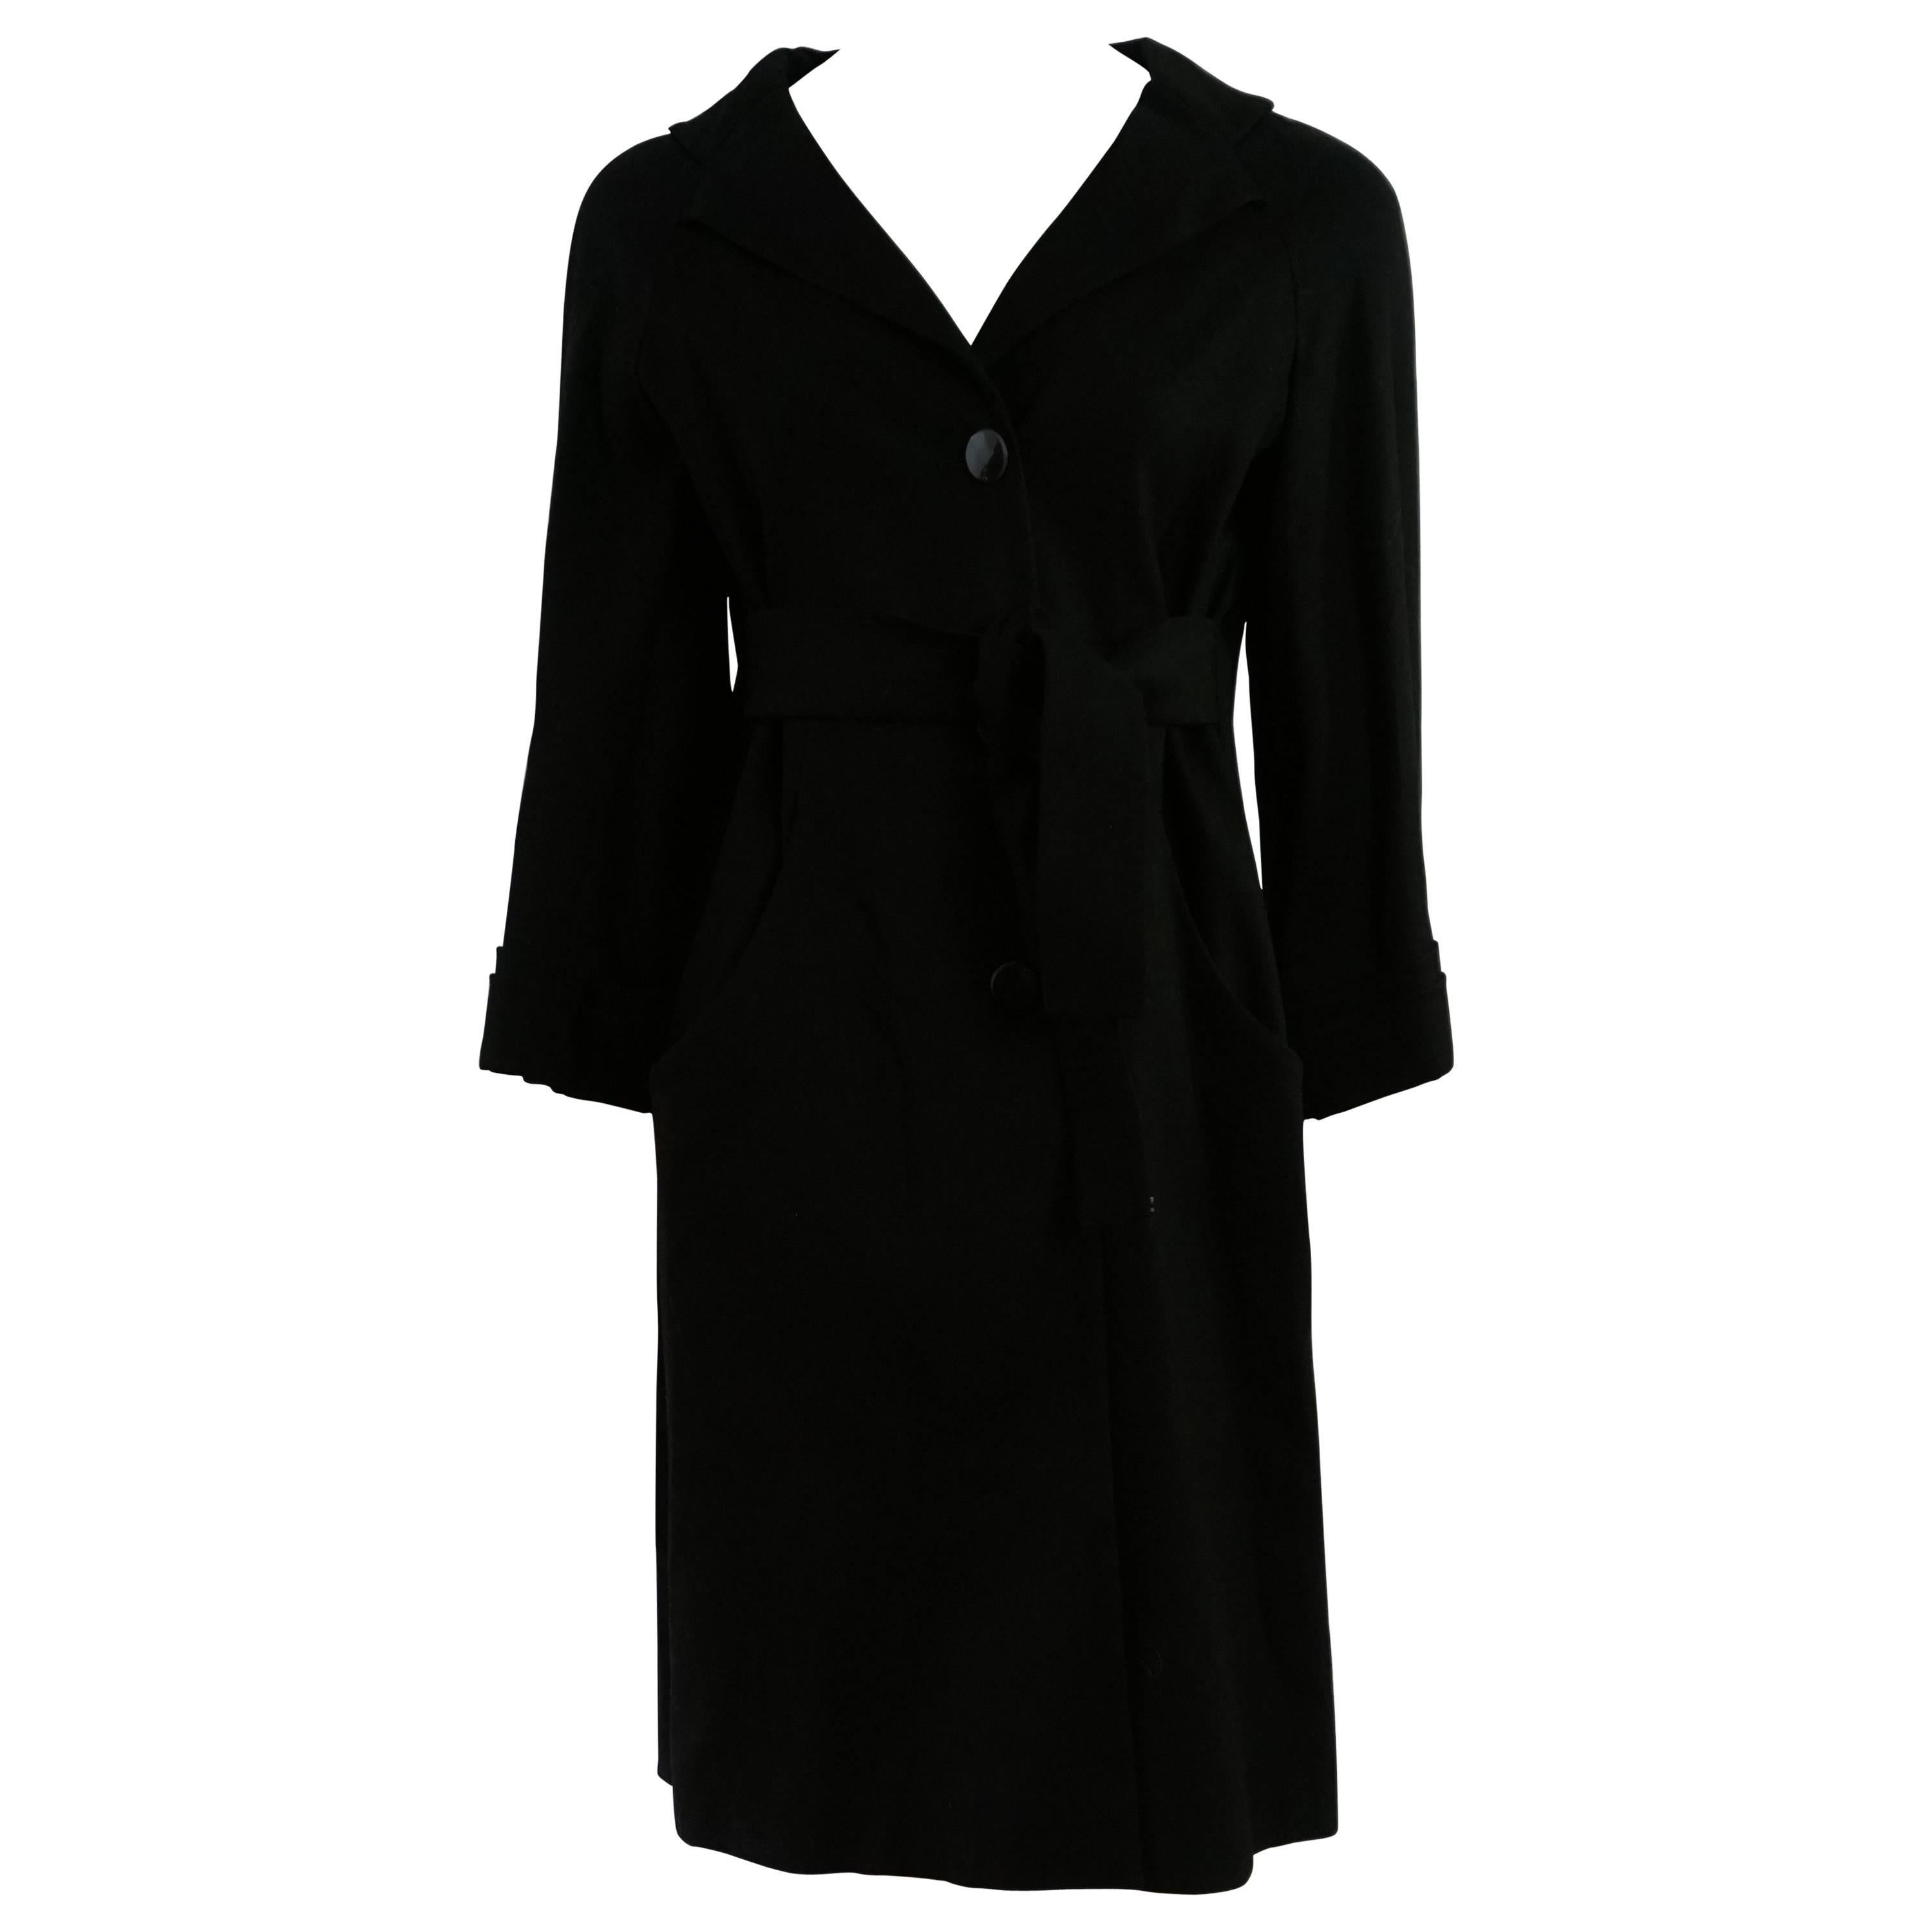 Gucci Black Coat Dress - 42 - NWT